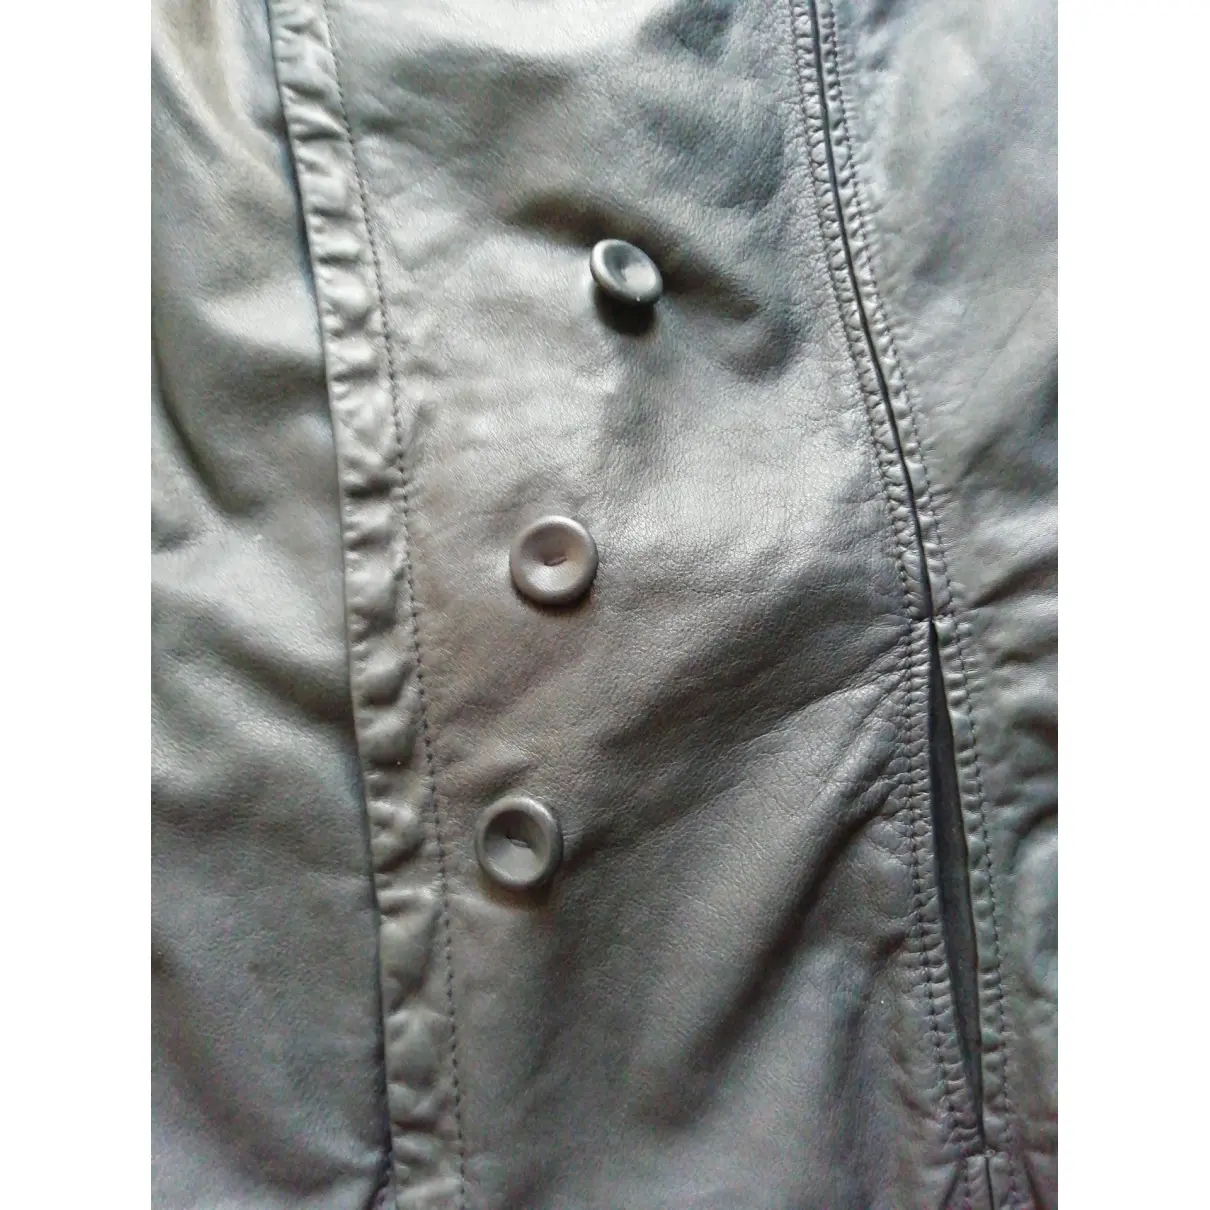 Buy Emporio Armani Leather short vest online